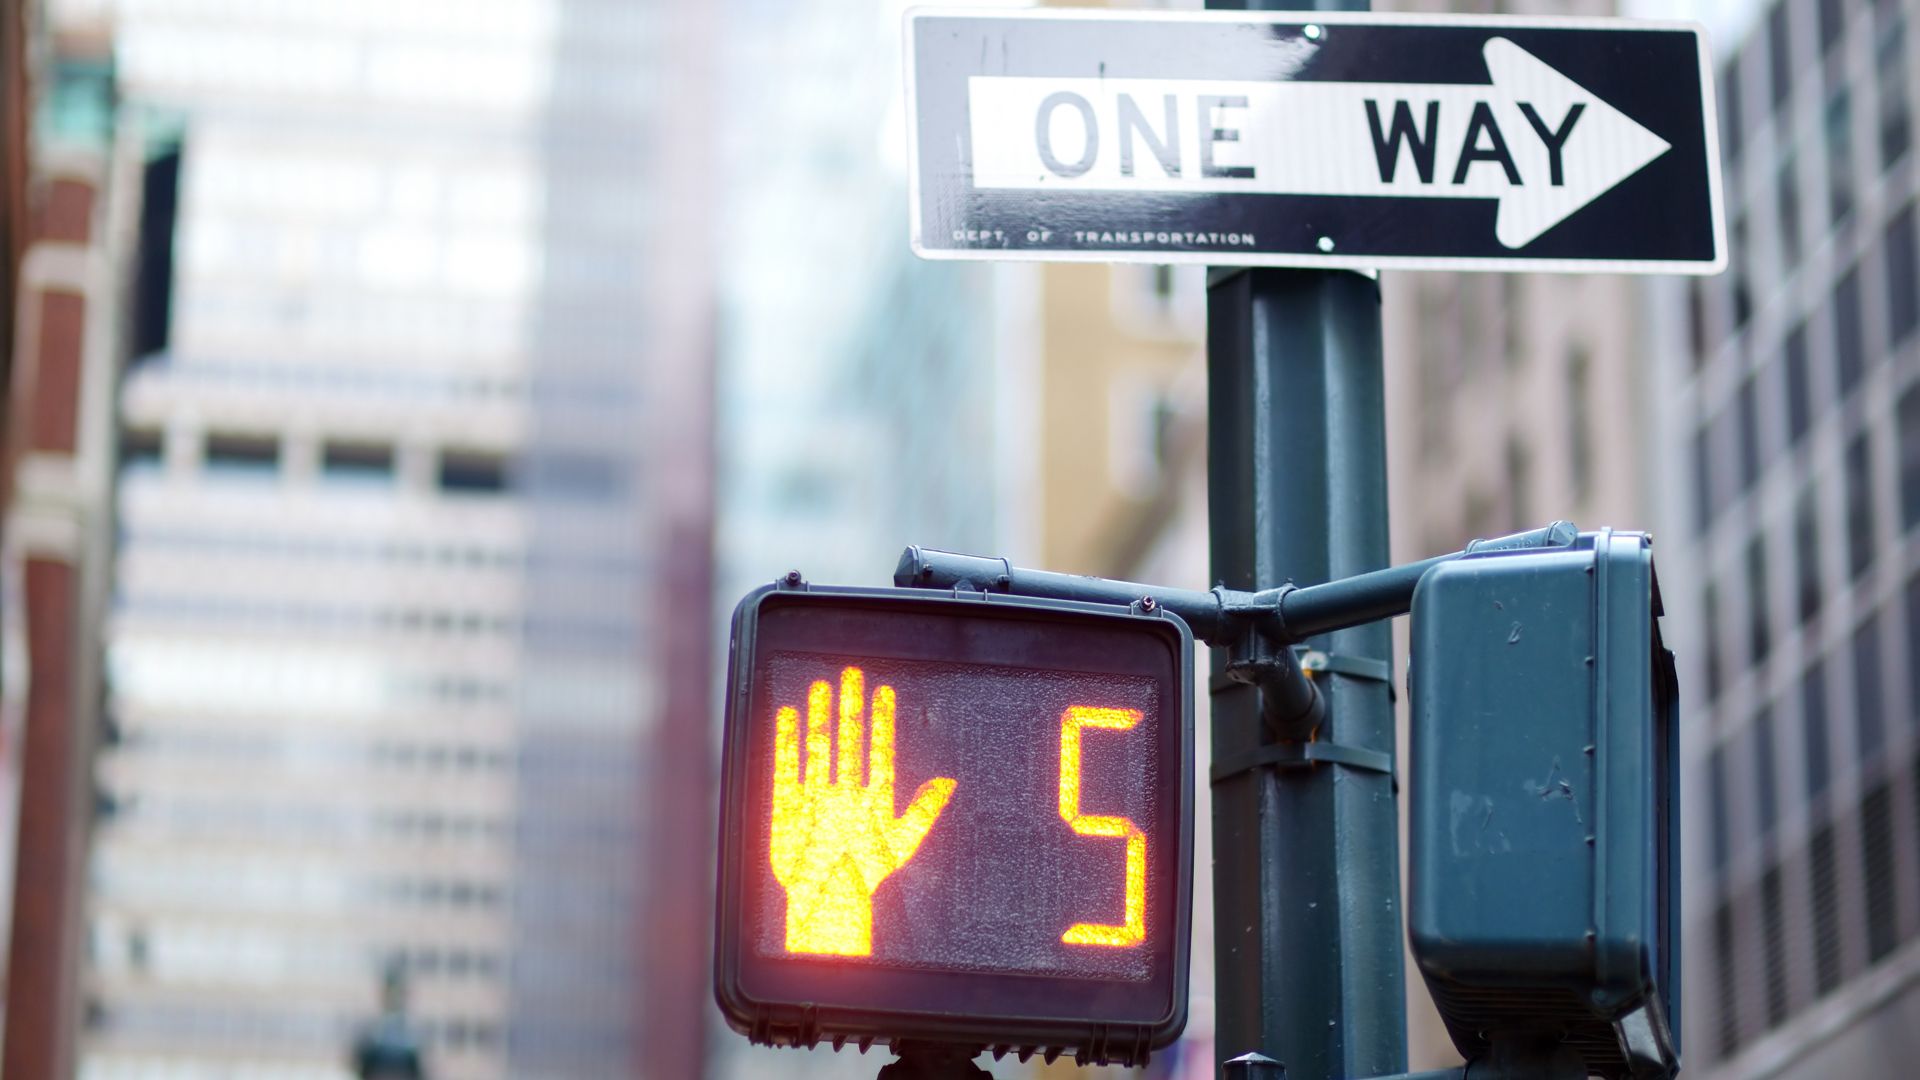 Don't walk street sign in New York City